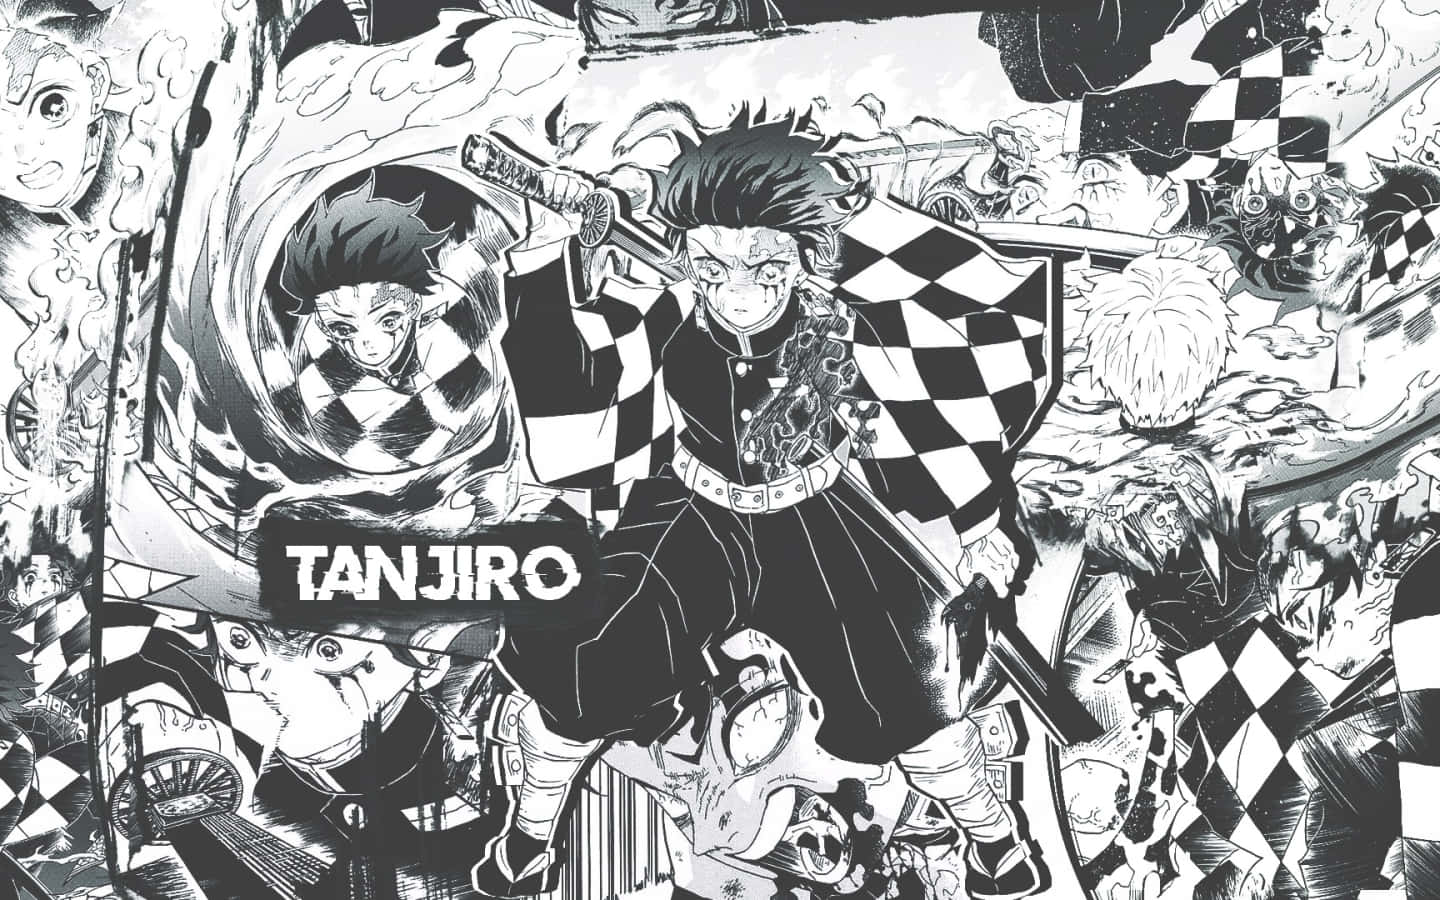 Tanjiro, the Demon Slayer